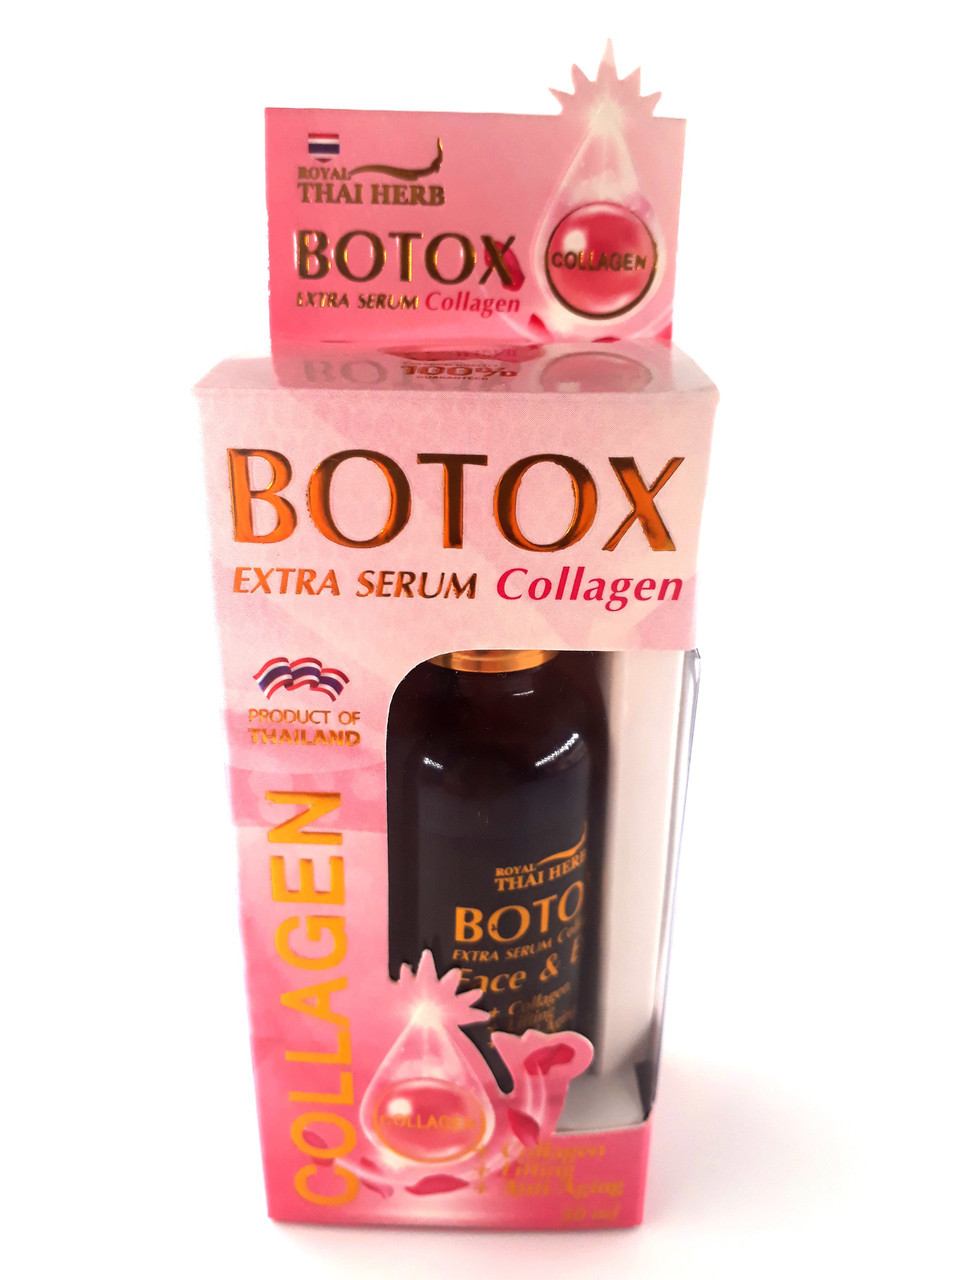 Ботокс сыворотка для лица с Коллагеном Royal Thai Herb Botox Extra Serum Collagen, 30 мл., Таиланд